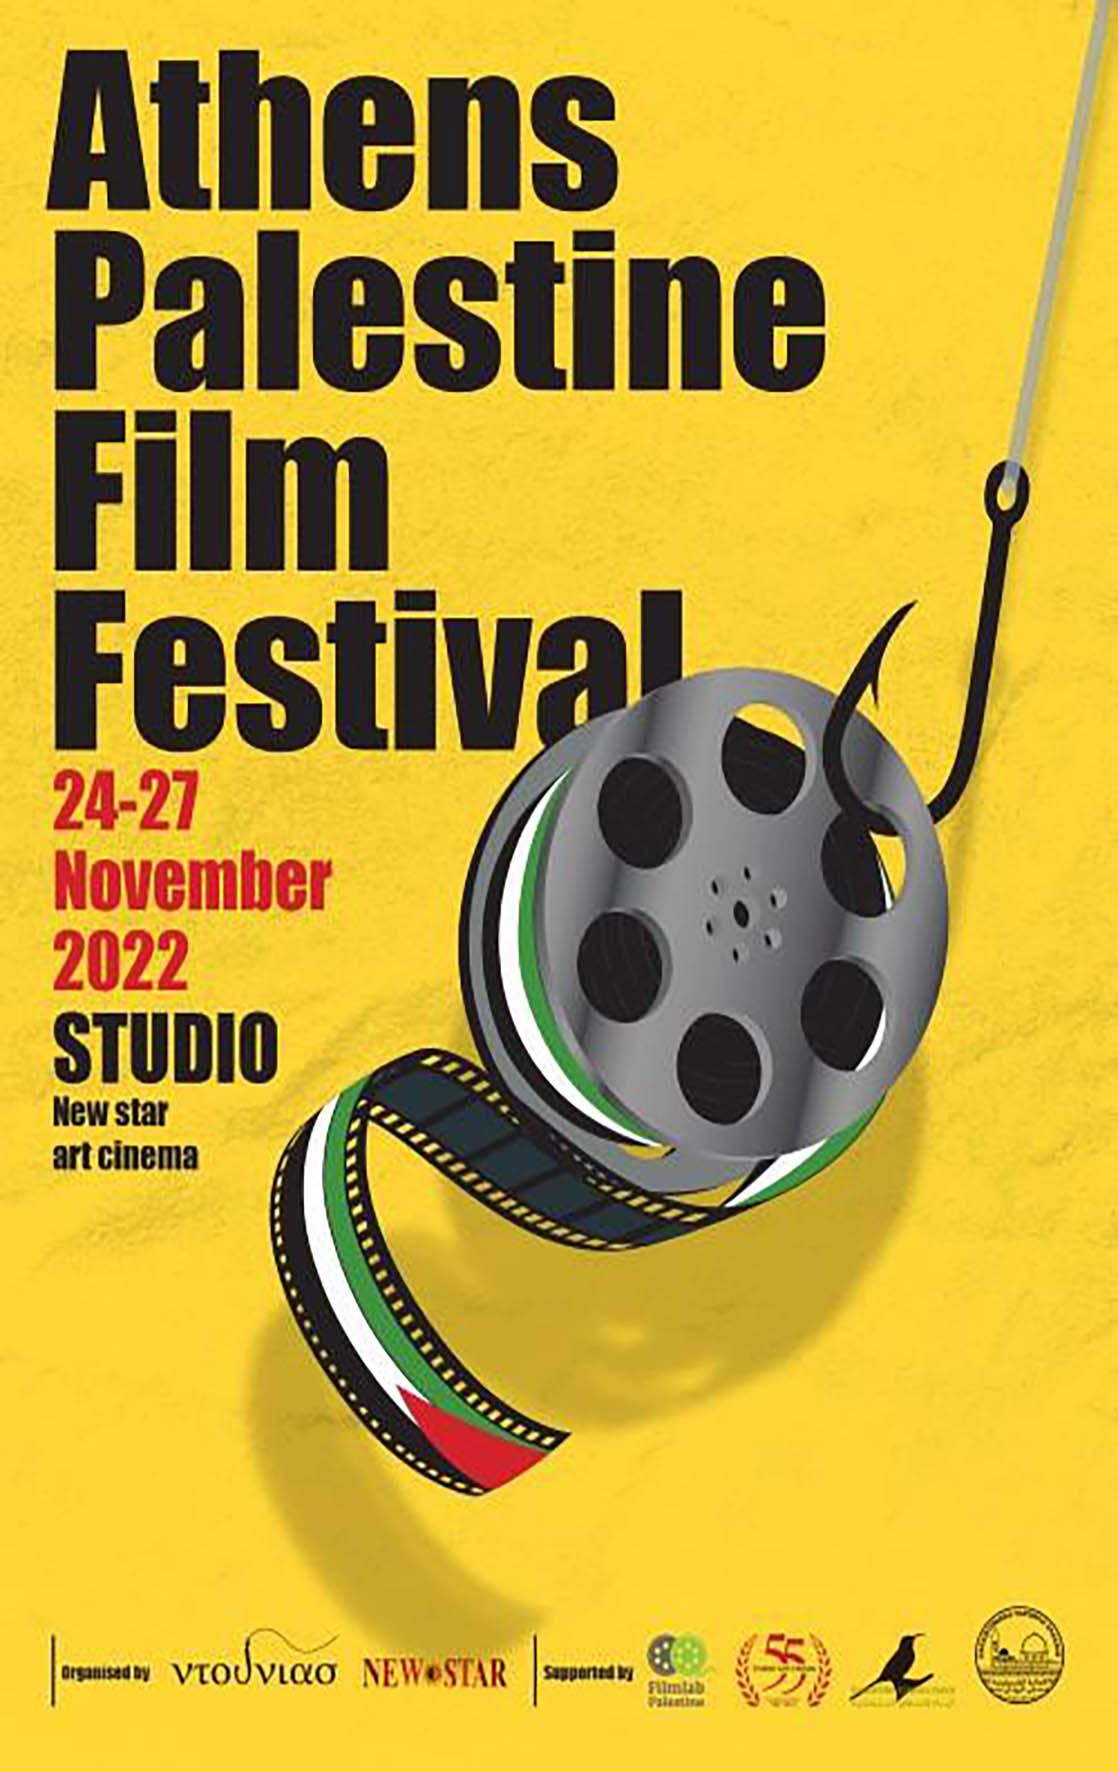 Athens Palestine Film Festival